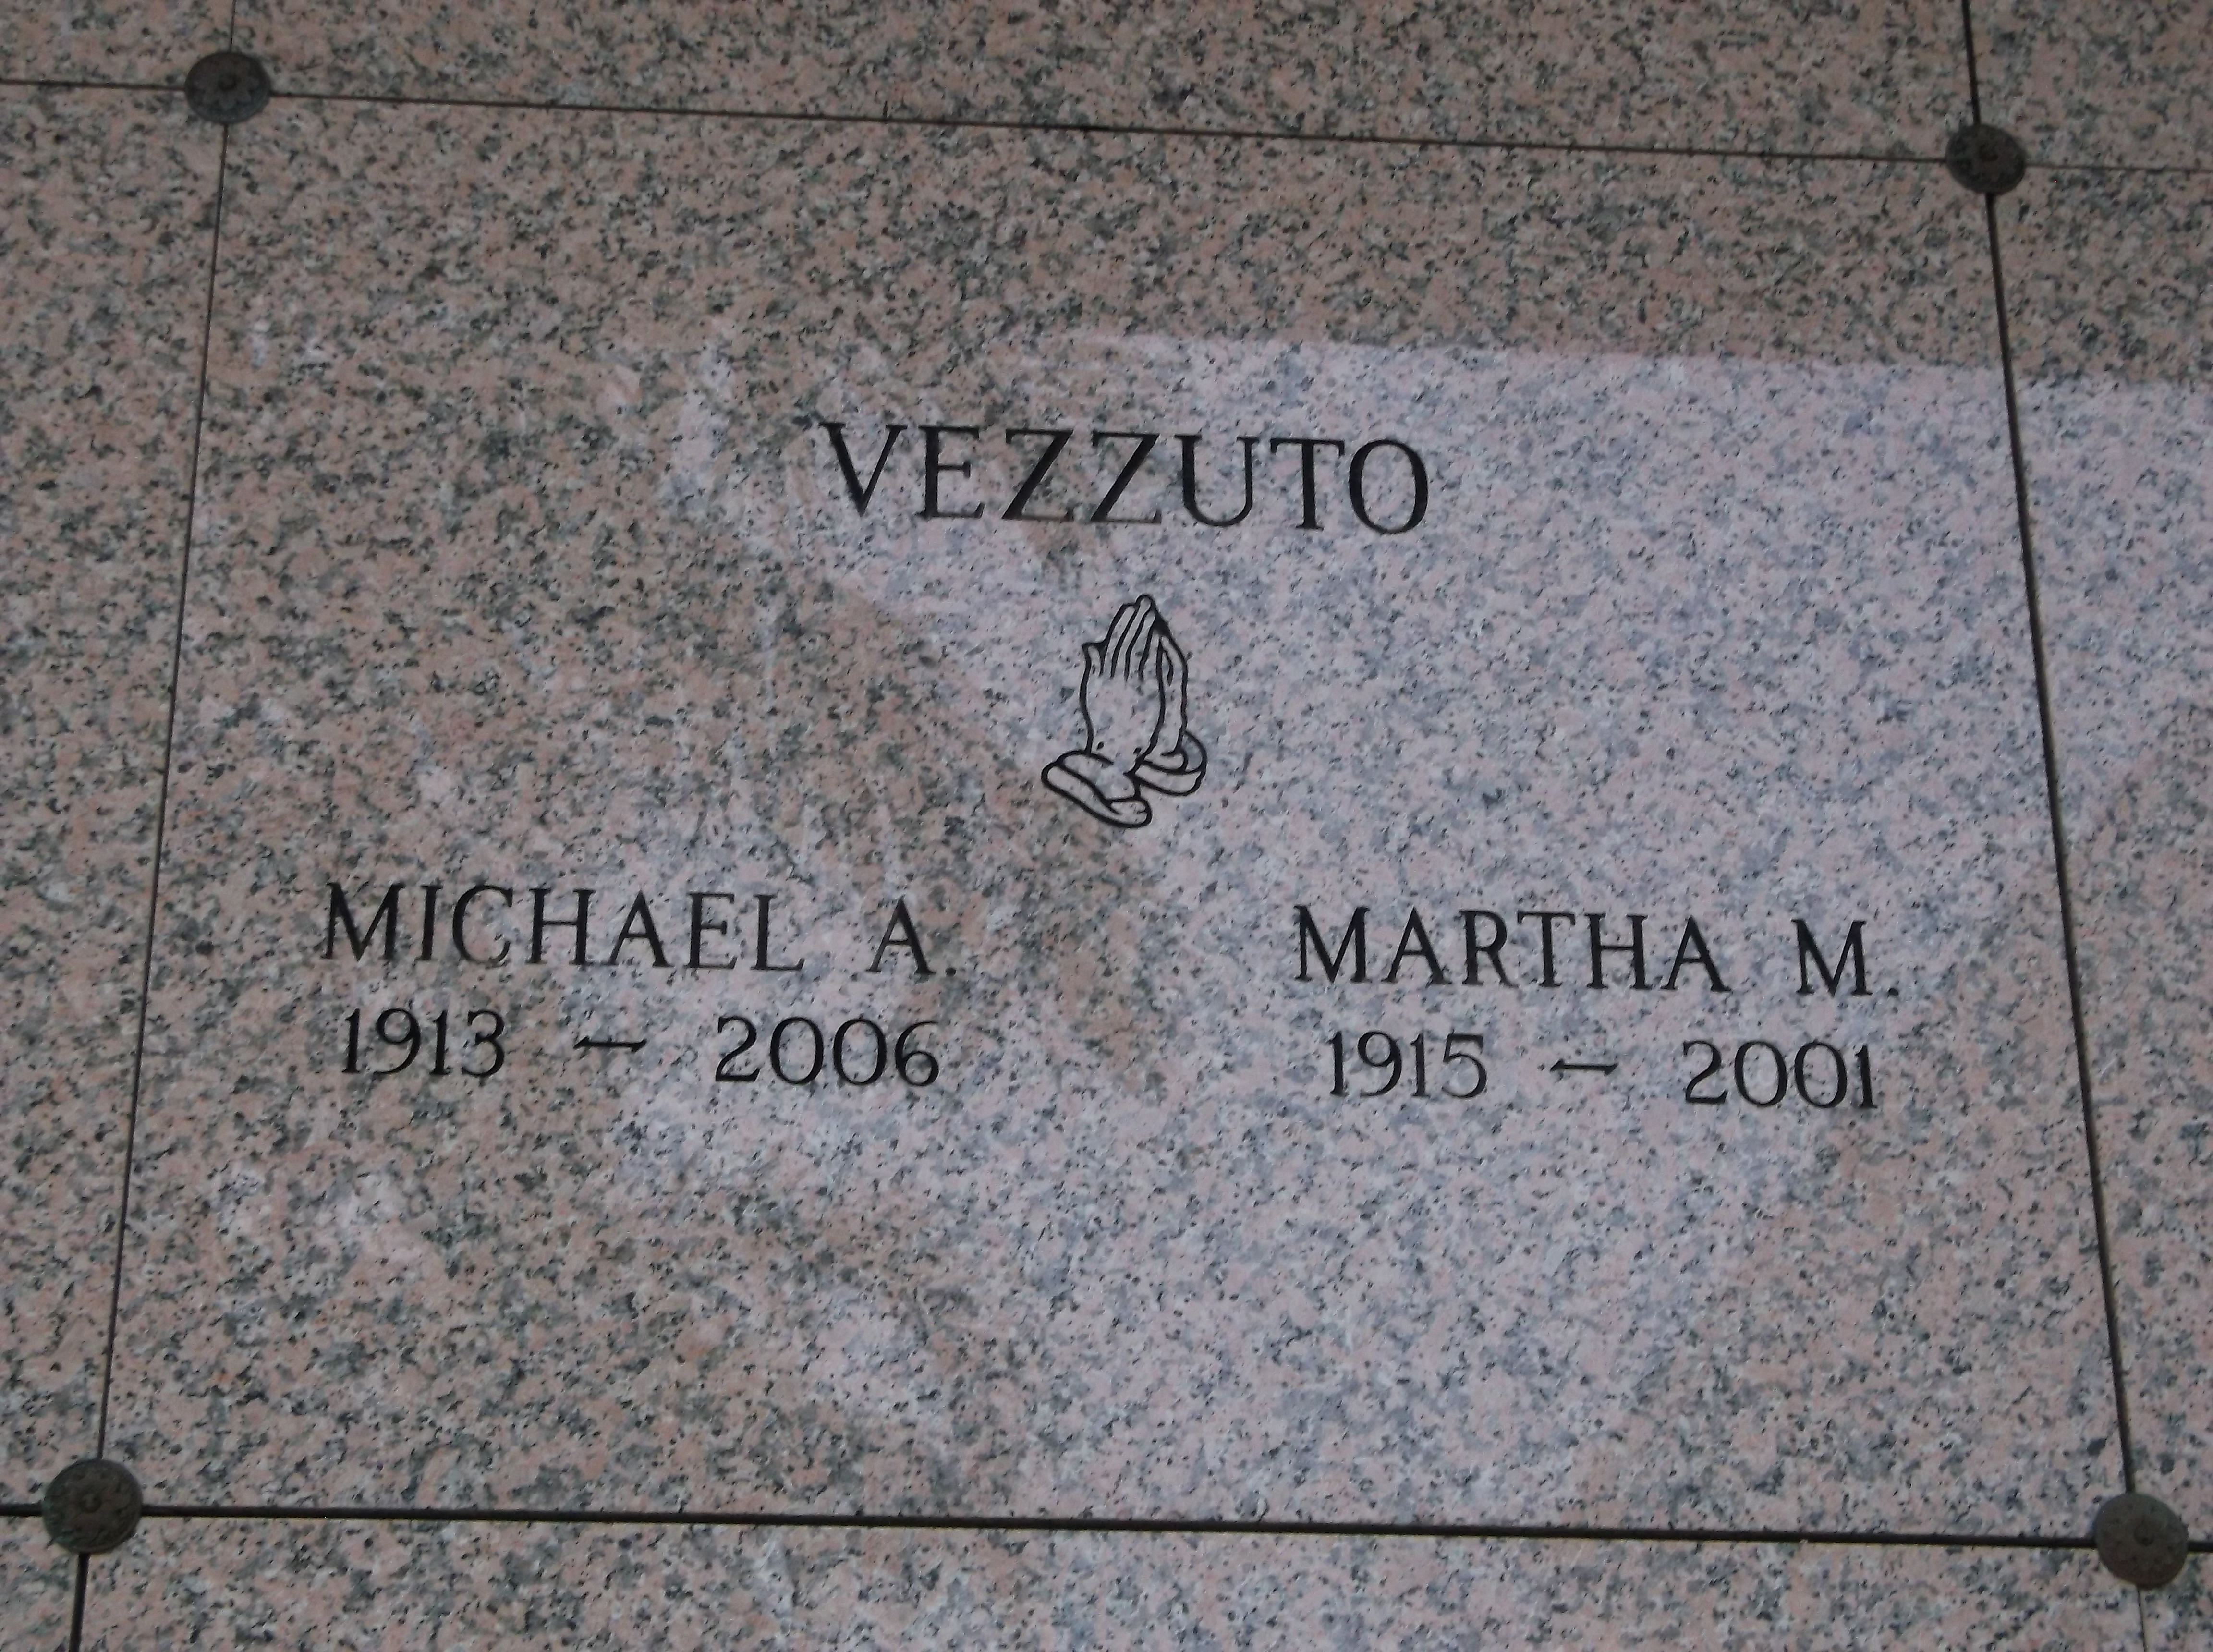 Michael A Vezzuto